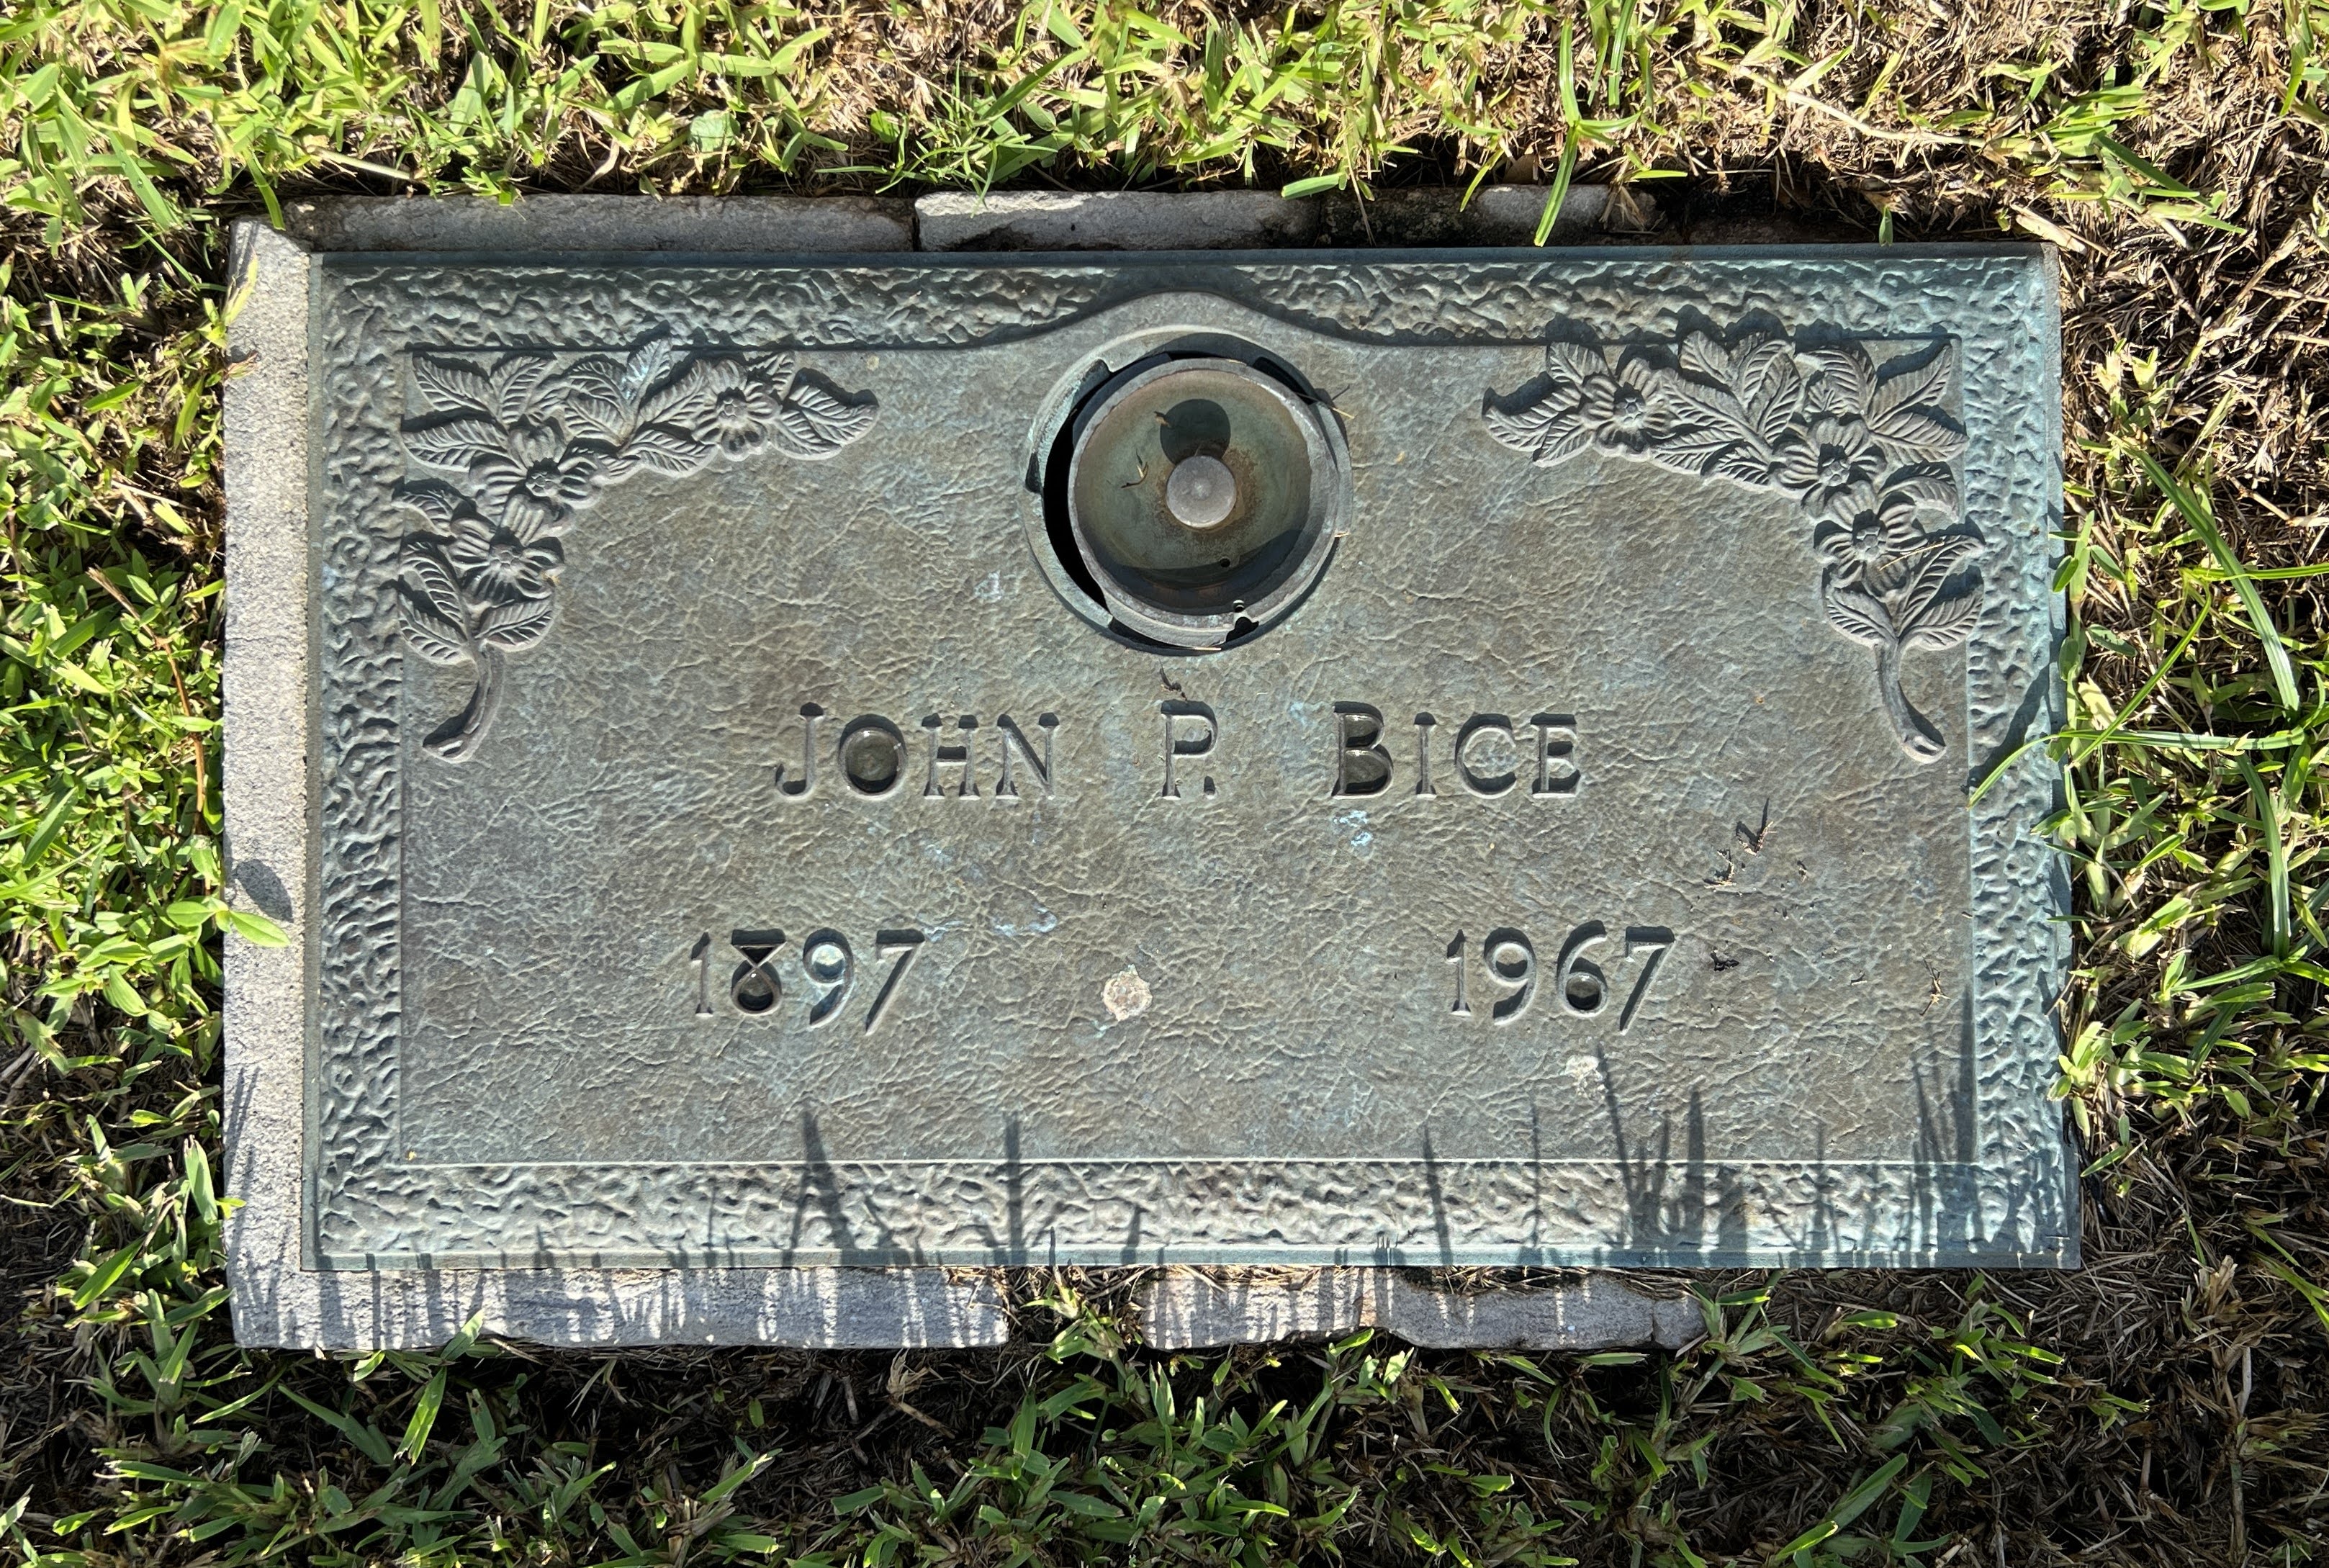 John P Bice